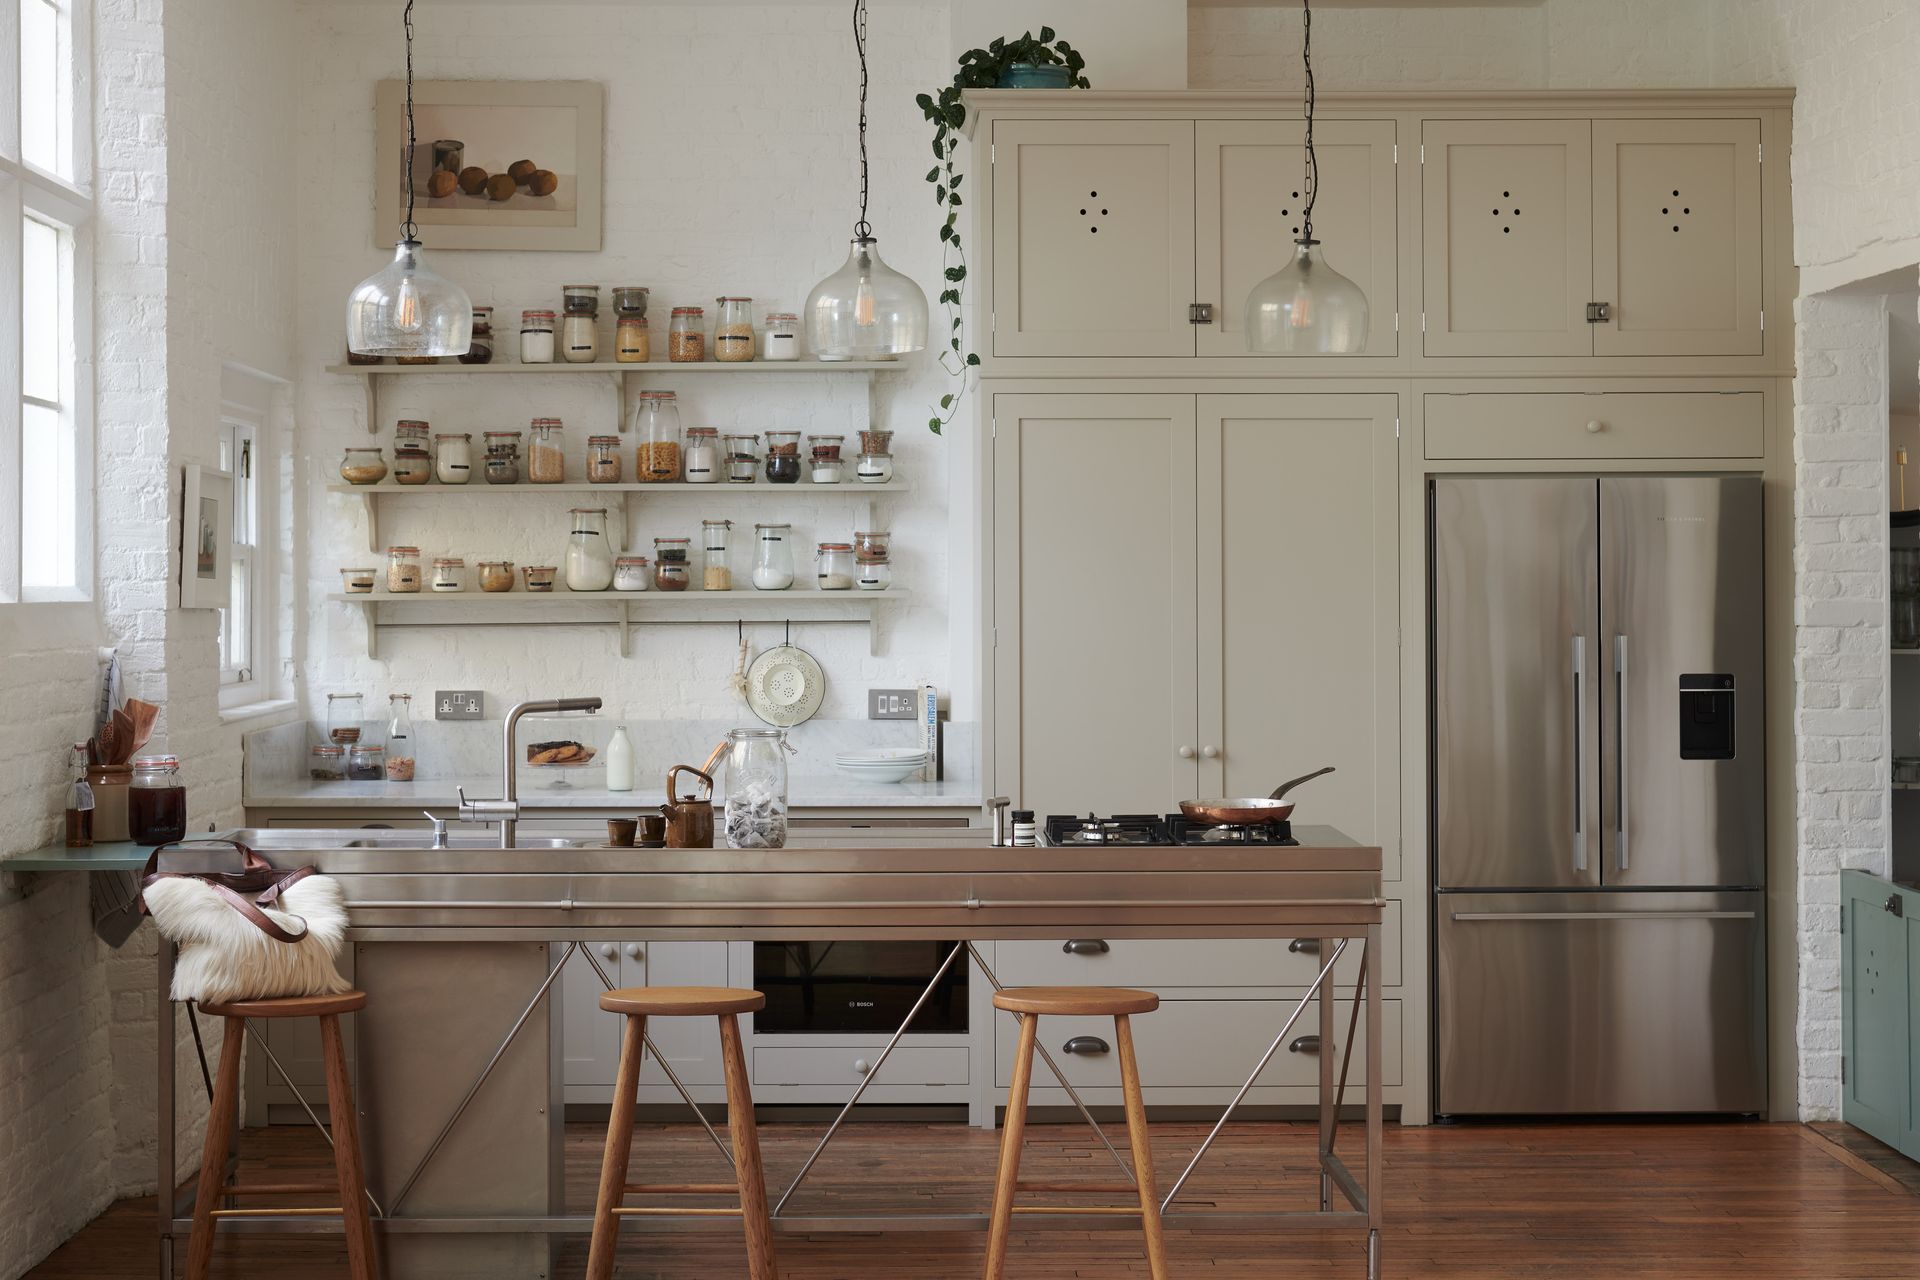 Kitchen island lighting ideas: 20 ways to make it functional and fabulous